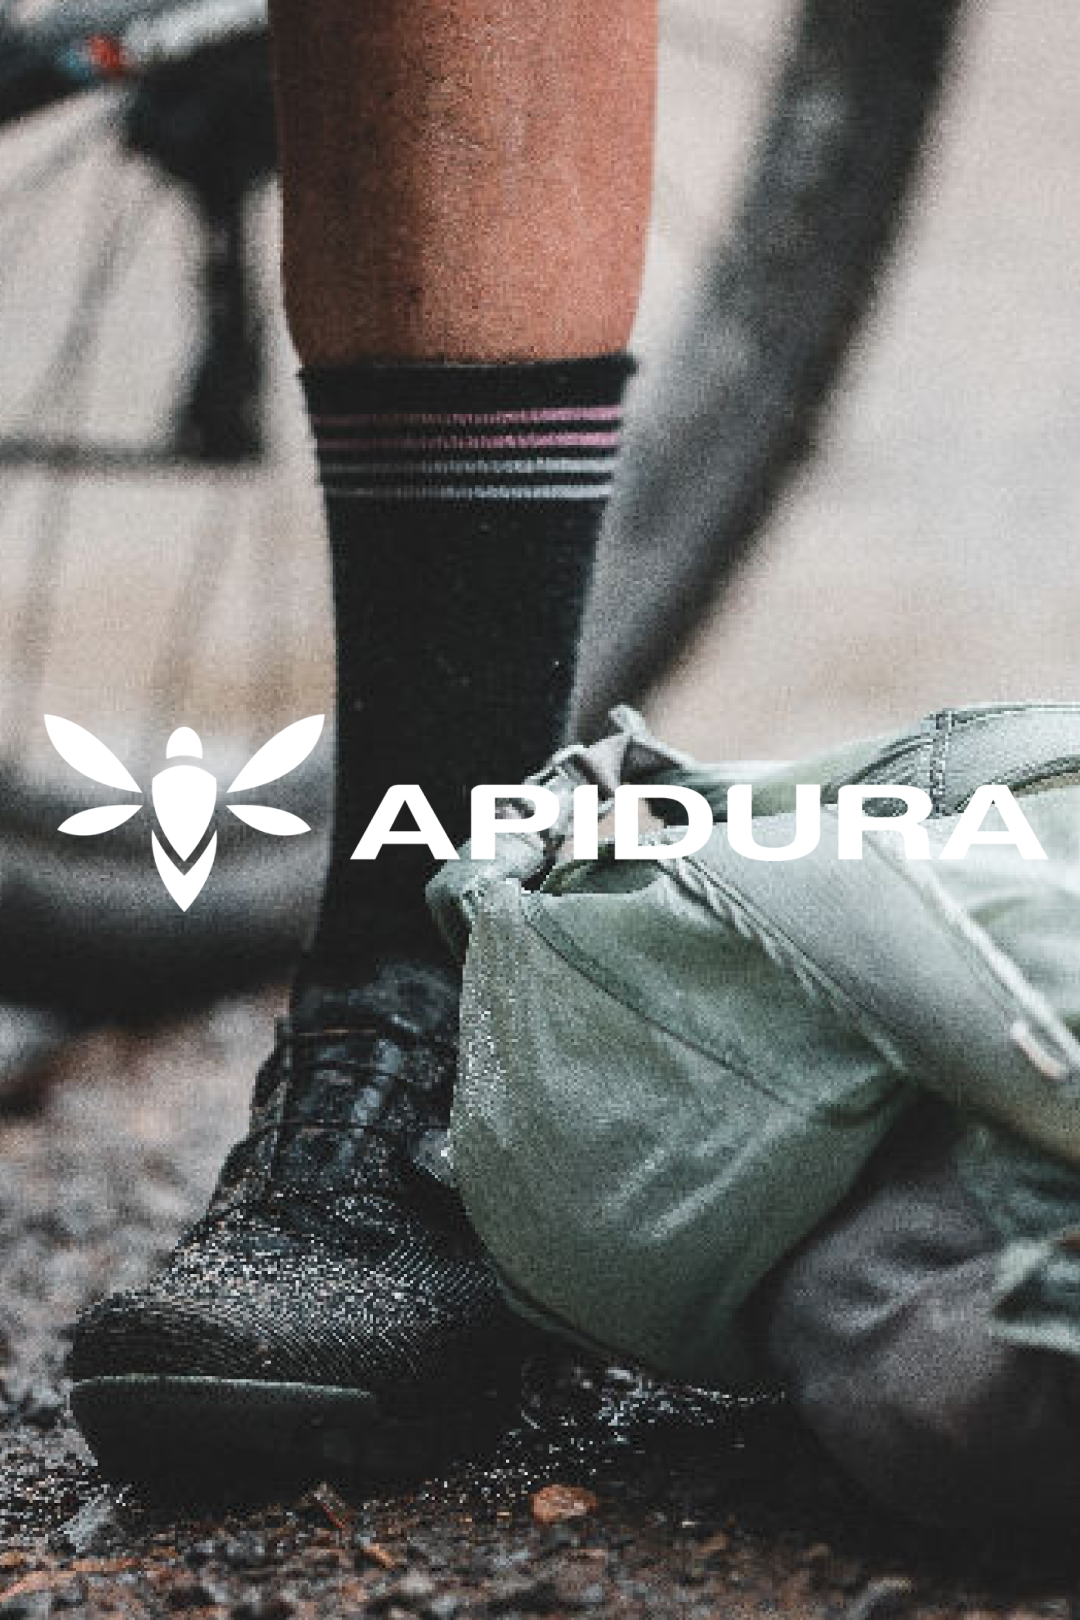 Adventurous cyclist tying a rugged Apidura bikepacking bag to a gravel bike @ Bici.